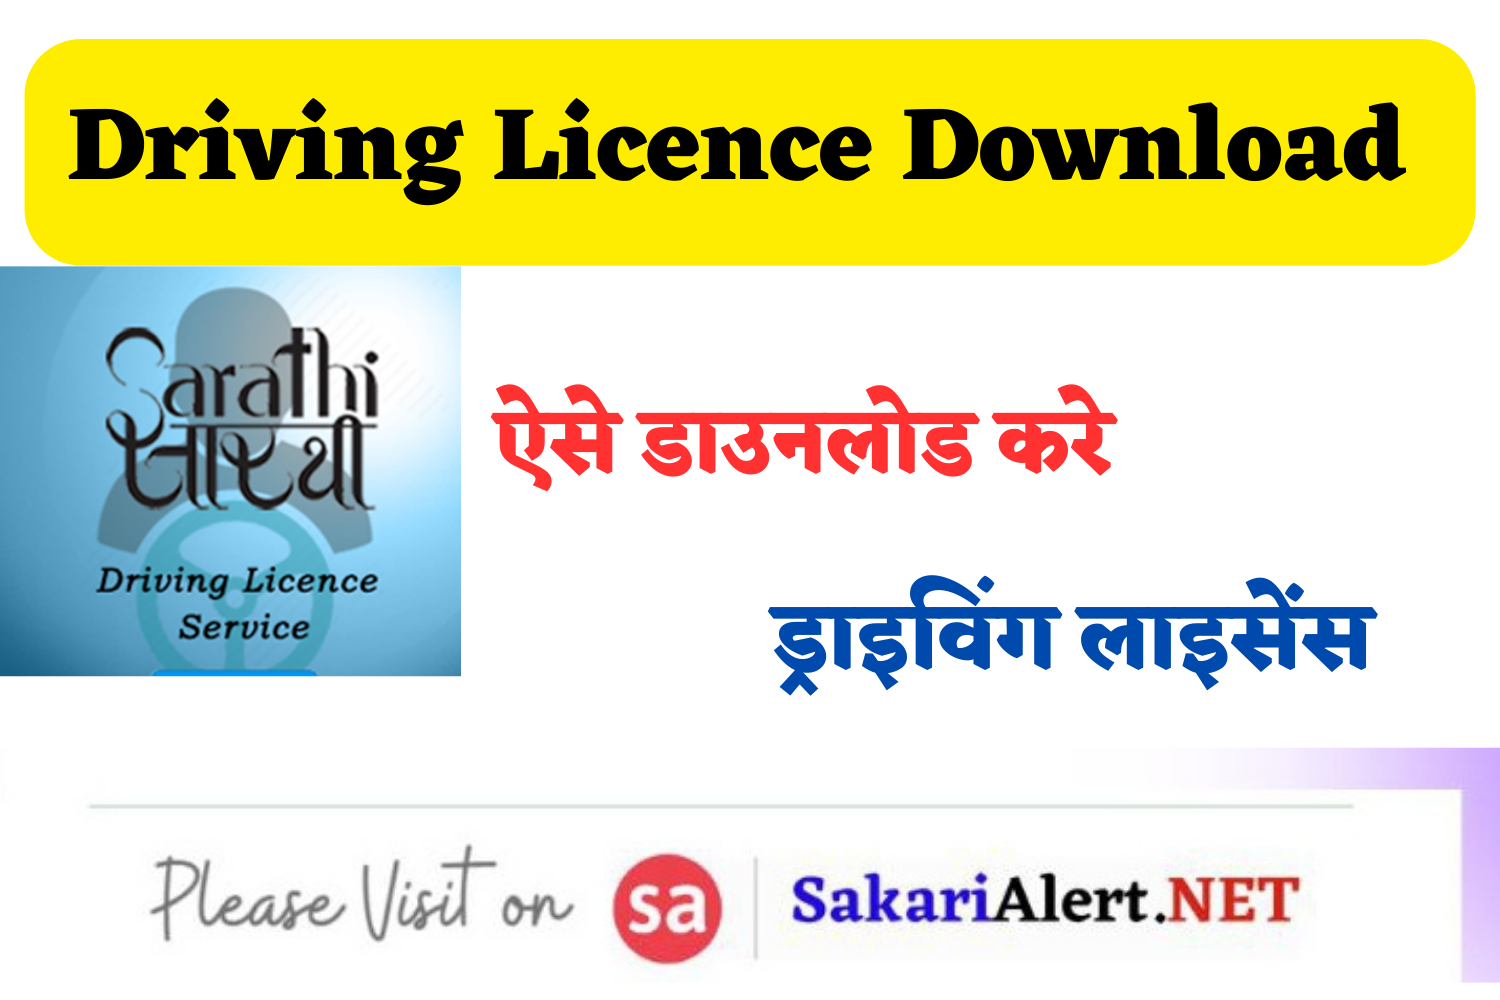 Driving Licence Download - ड्राइविंग लाइसेंस डाउनलोड